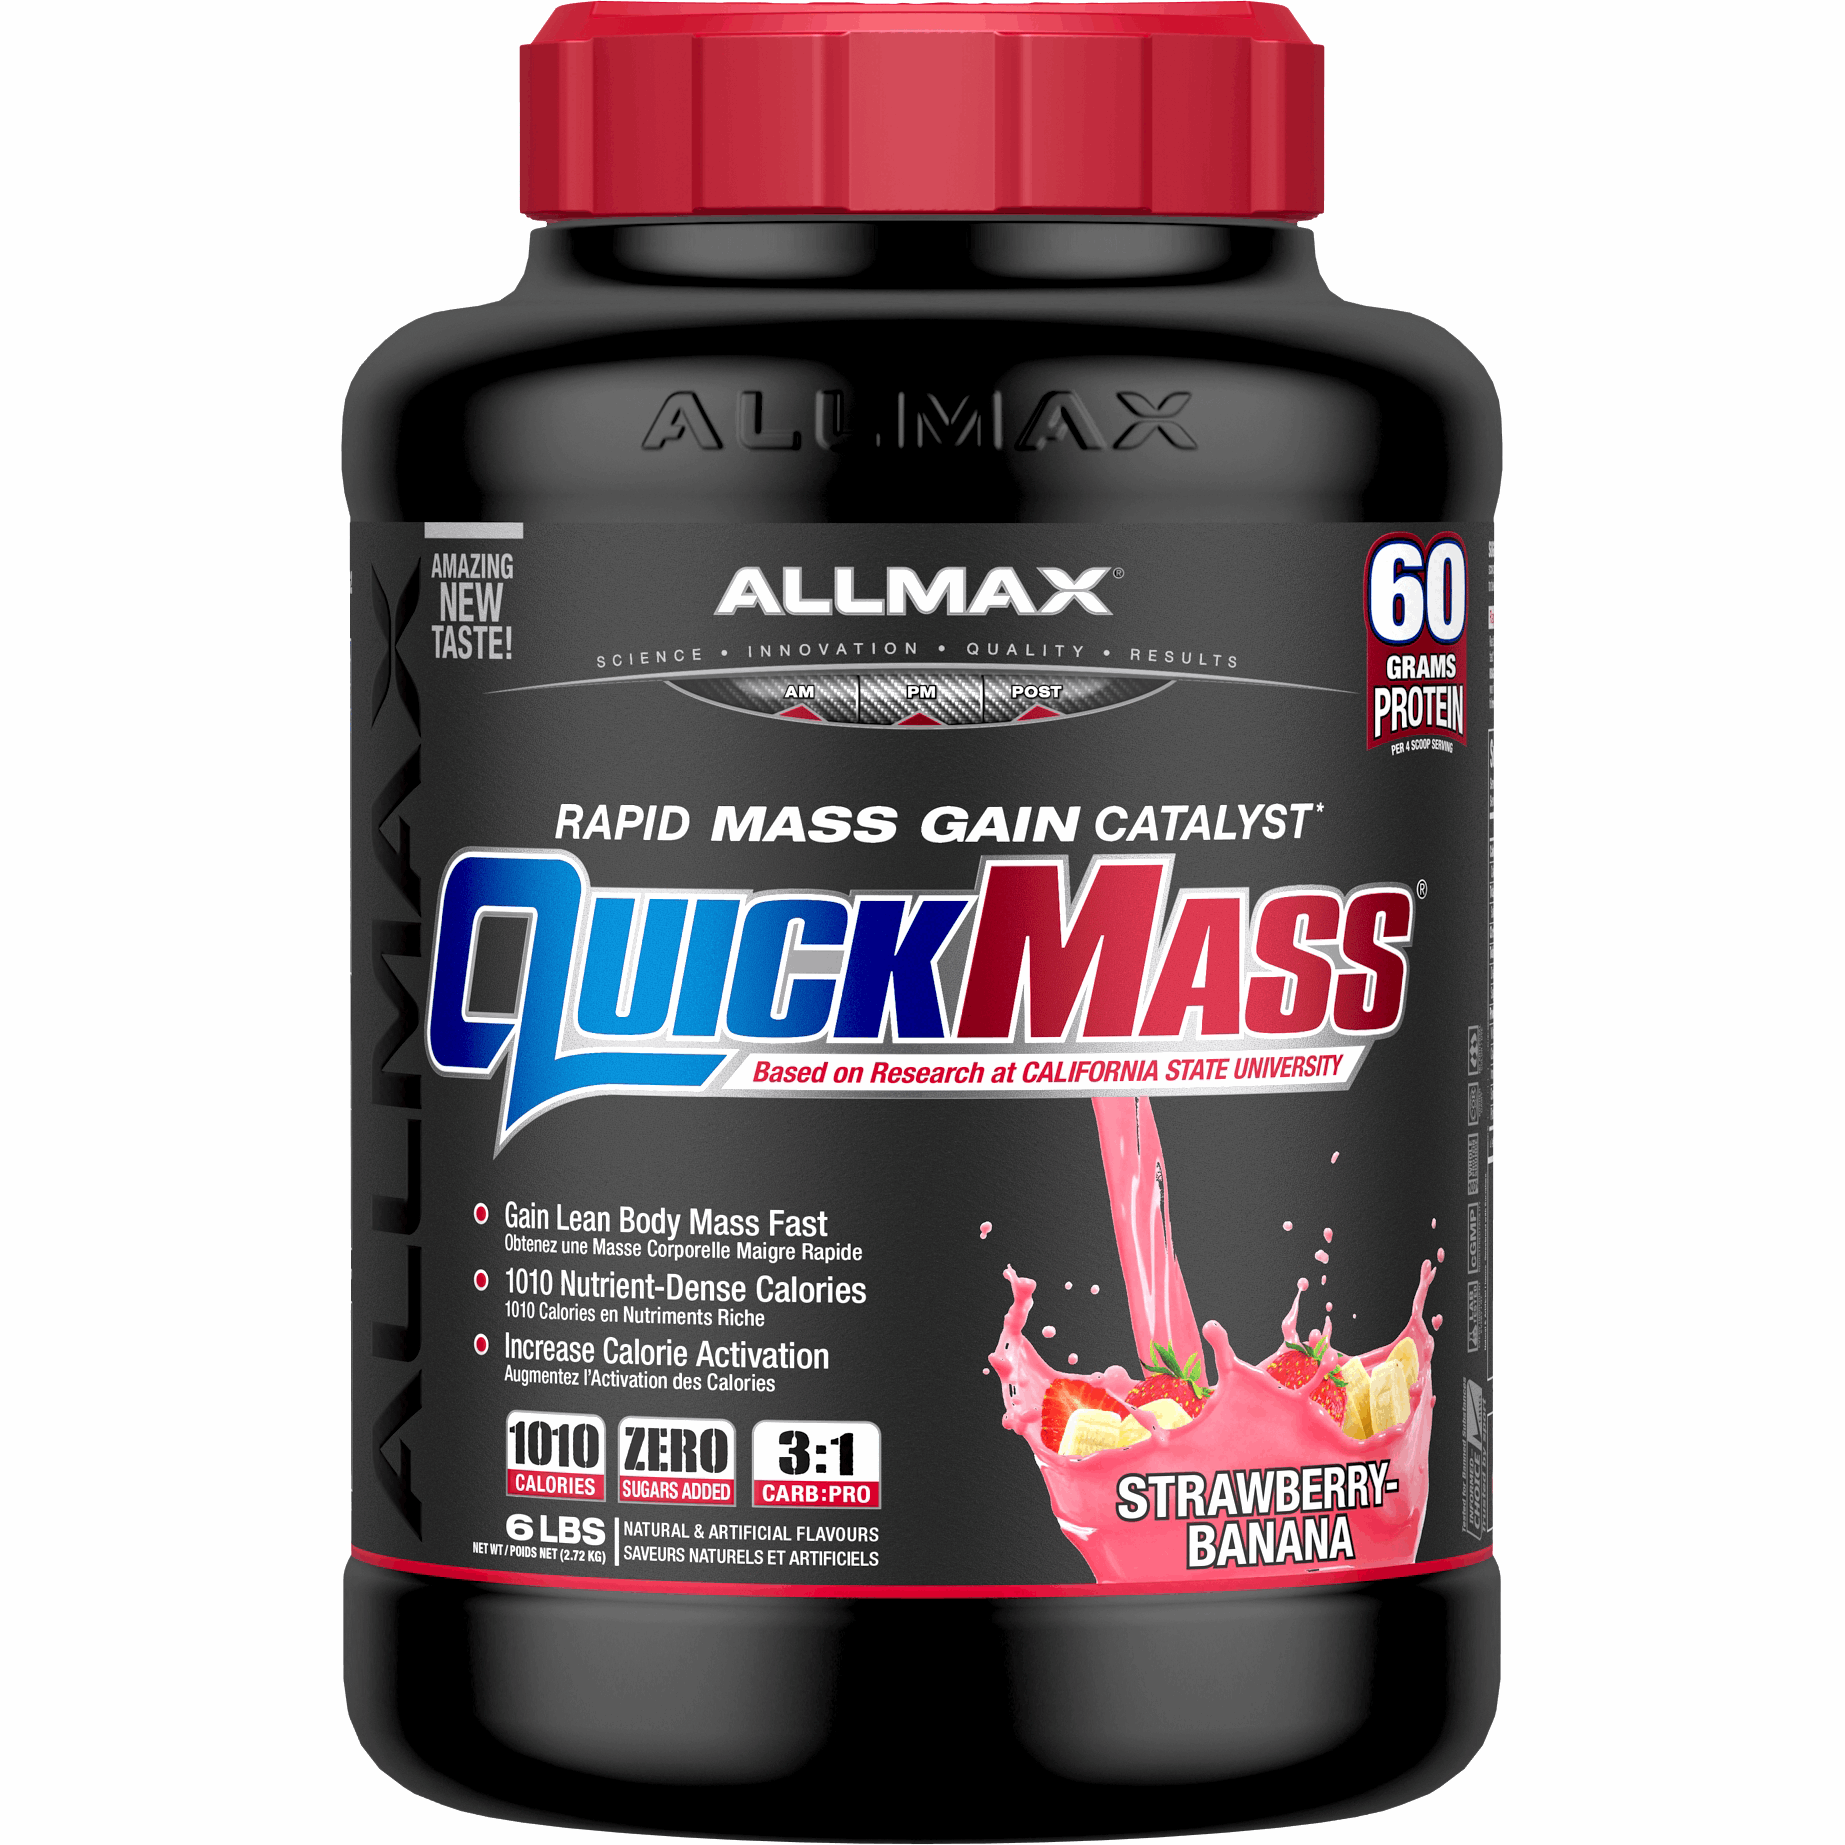 ALLMAX Quickmass (6 LBS) Mass Gainers Strawberry Banana Allmax Nutrition